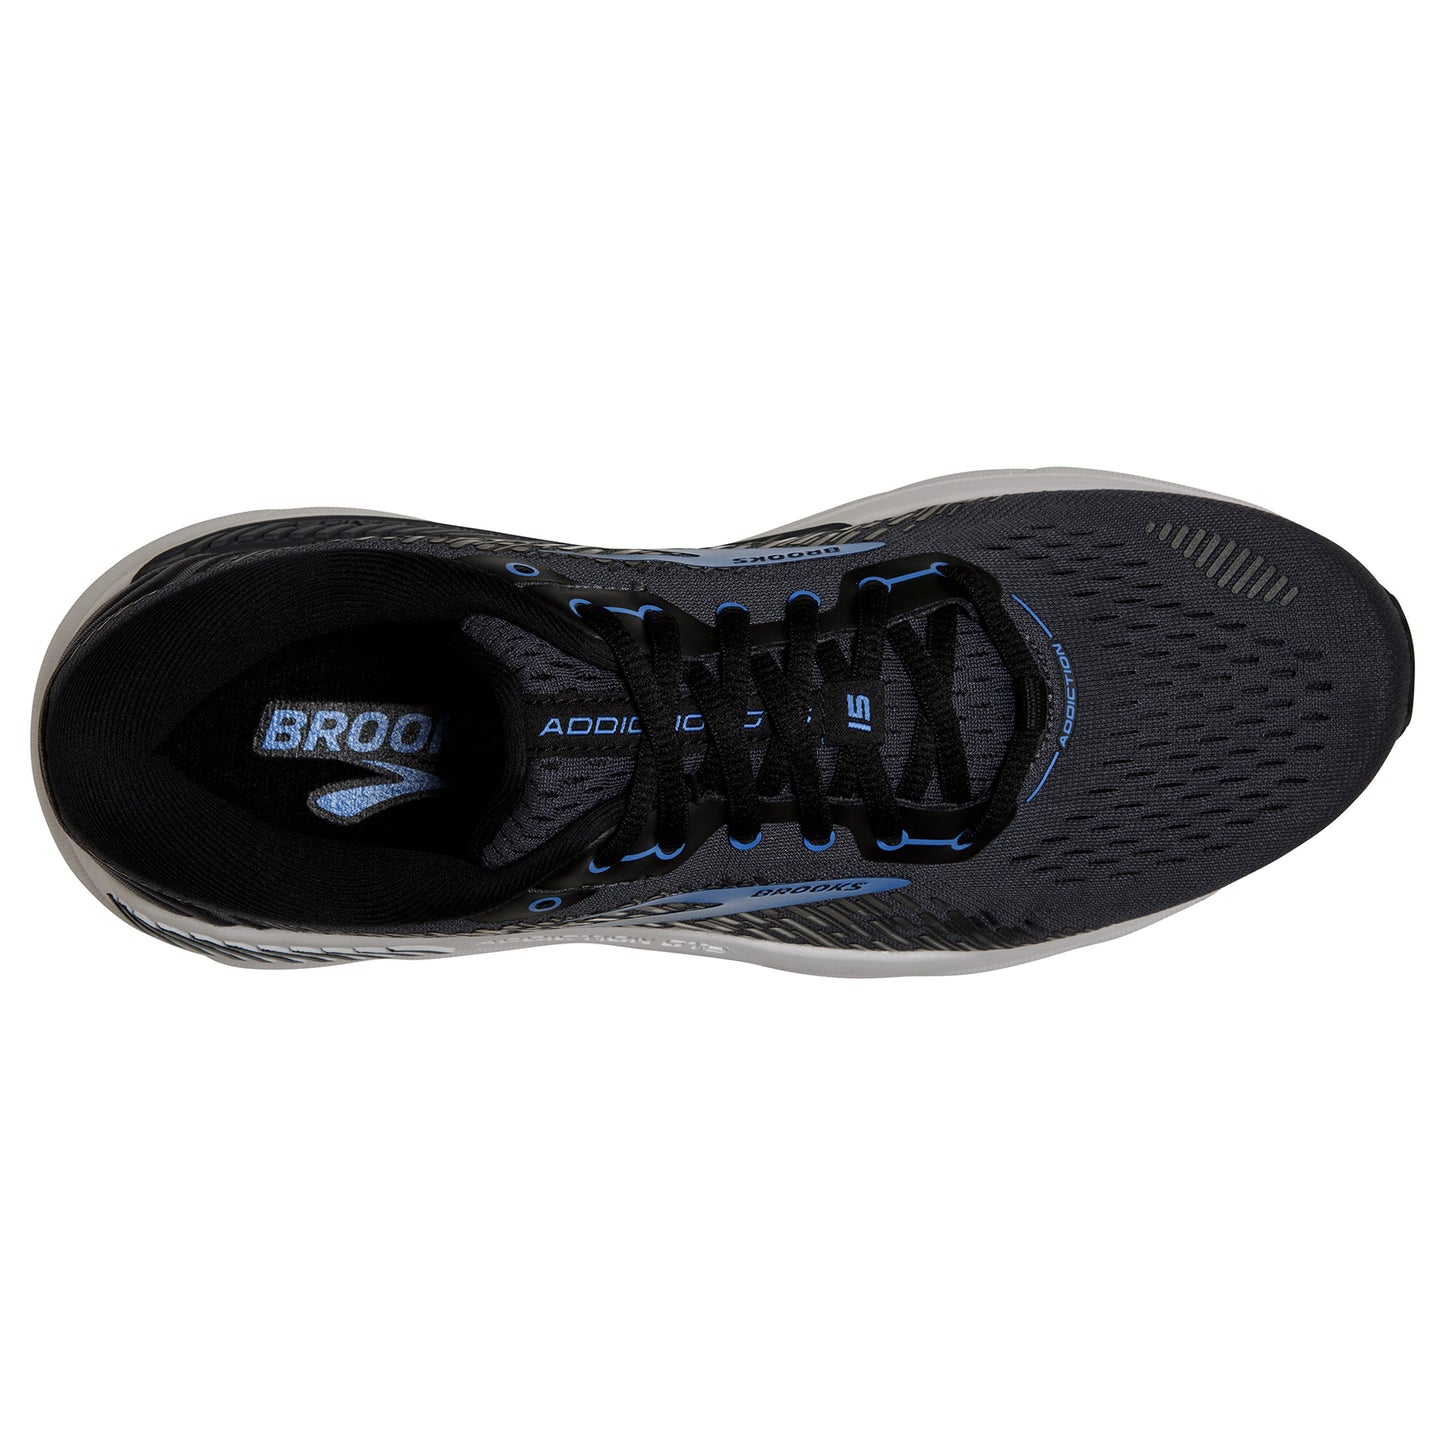 Men's Addiction GTS 15 Running Shoe  - India Ink/Black/Blue - Extra Wide (4E)